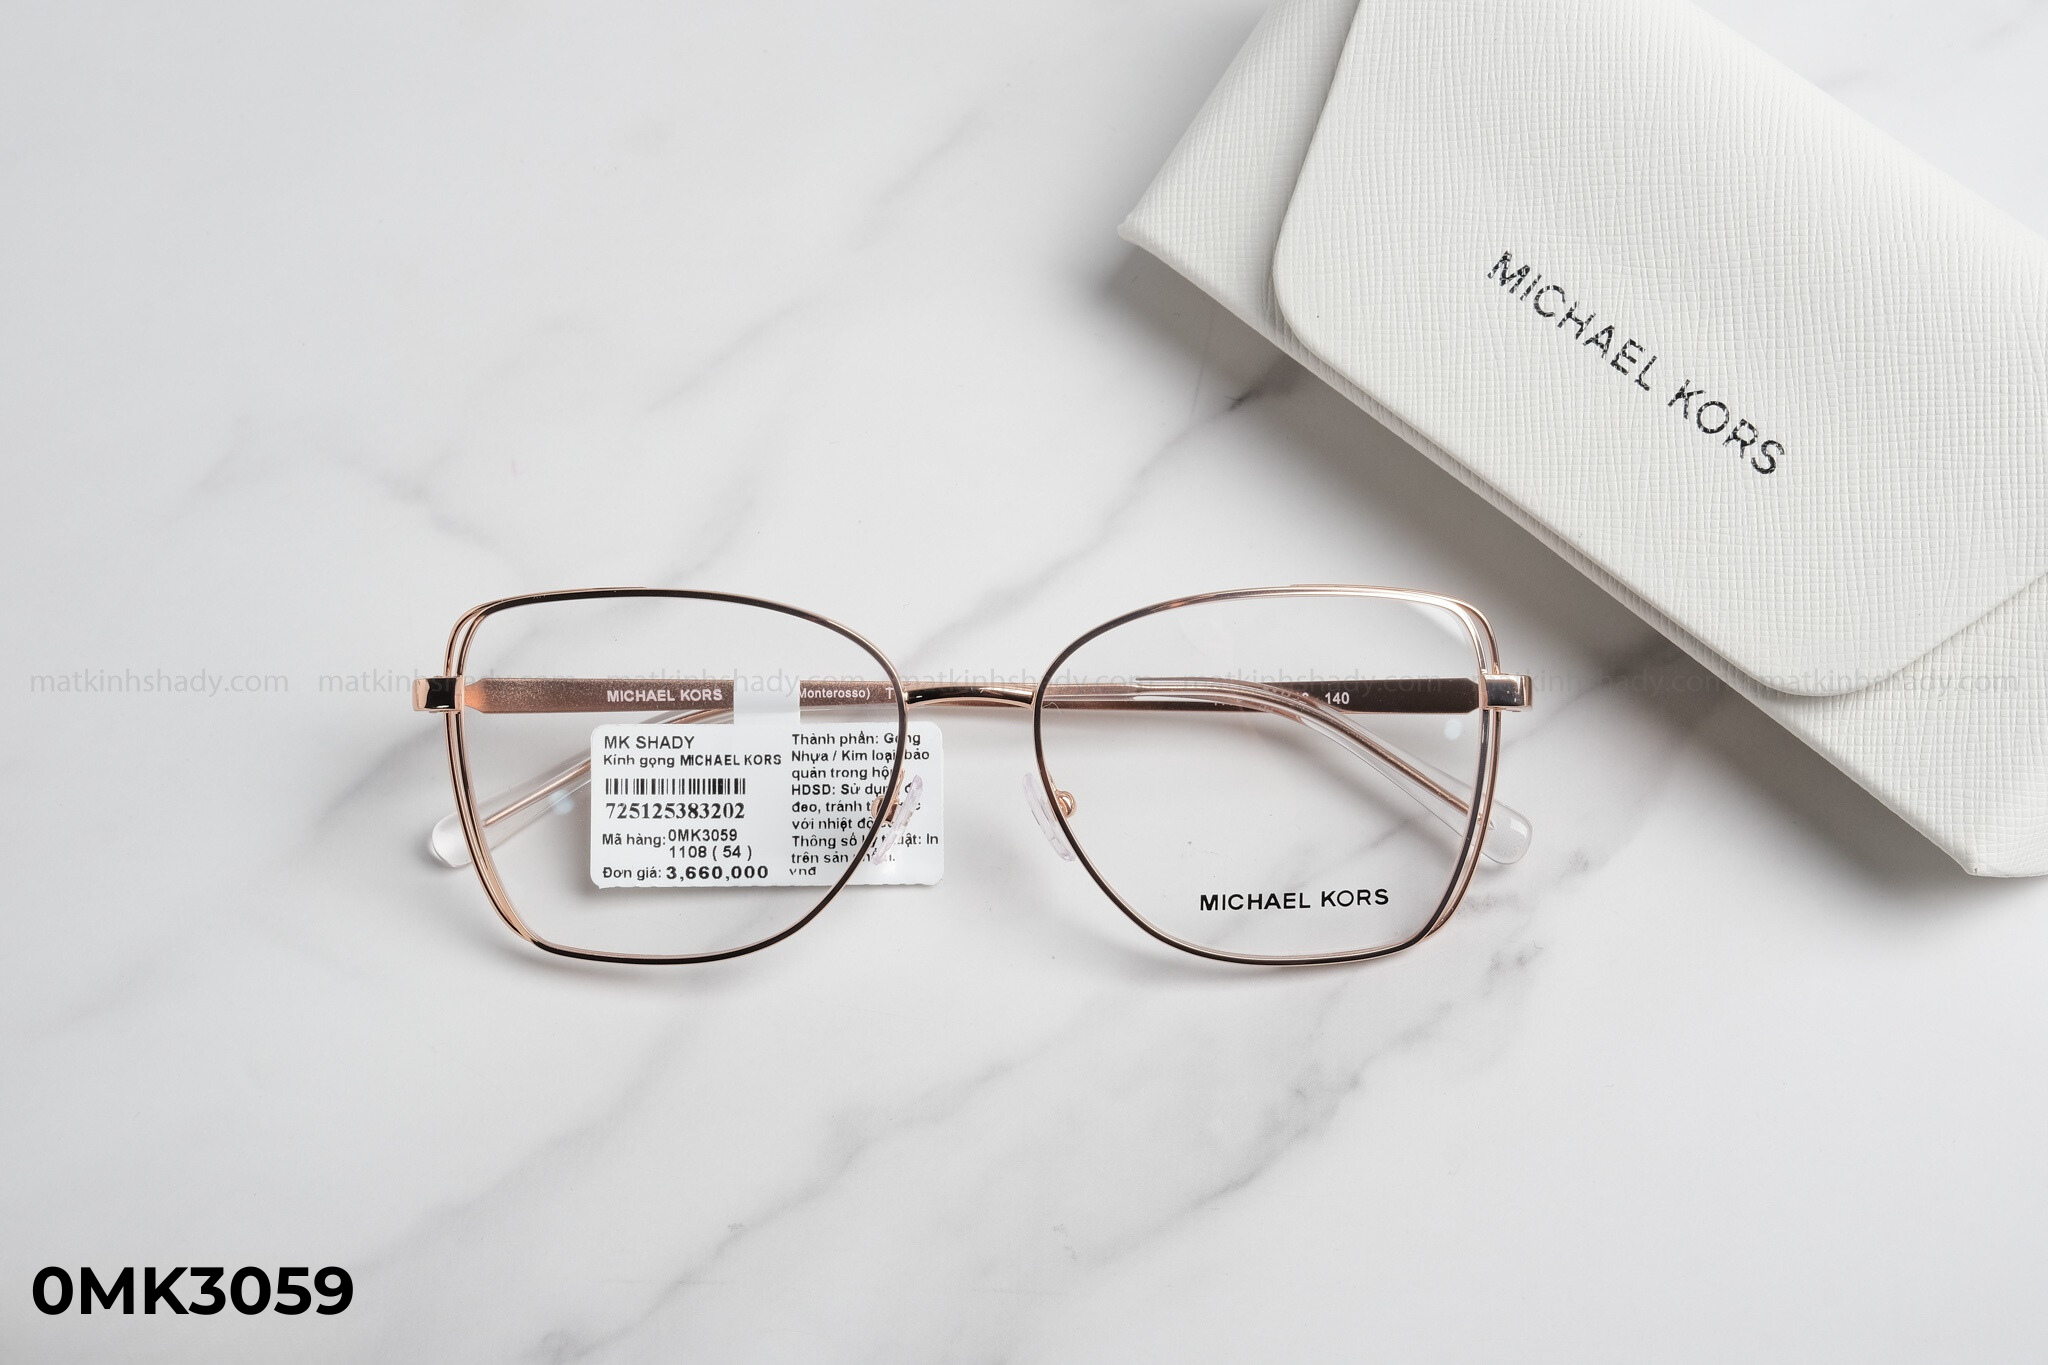  Michael Kors Eyewear - Glasses - 0MK3059 